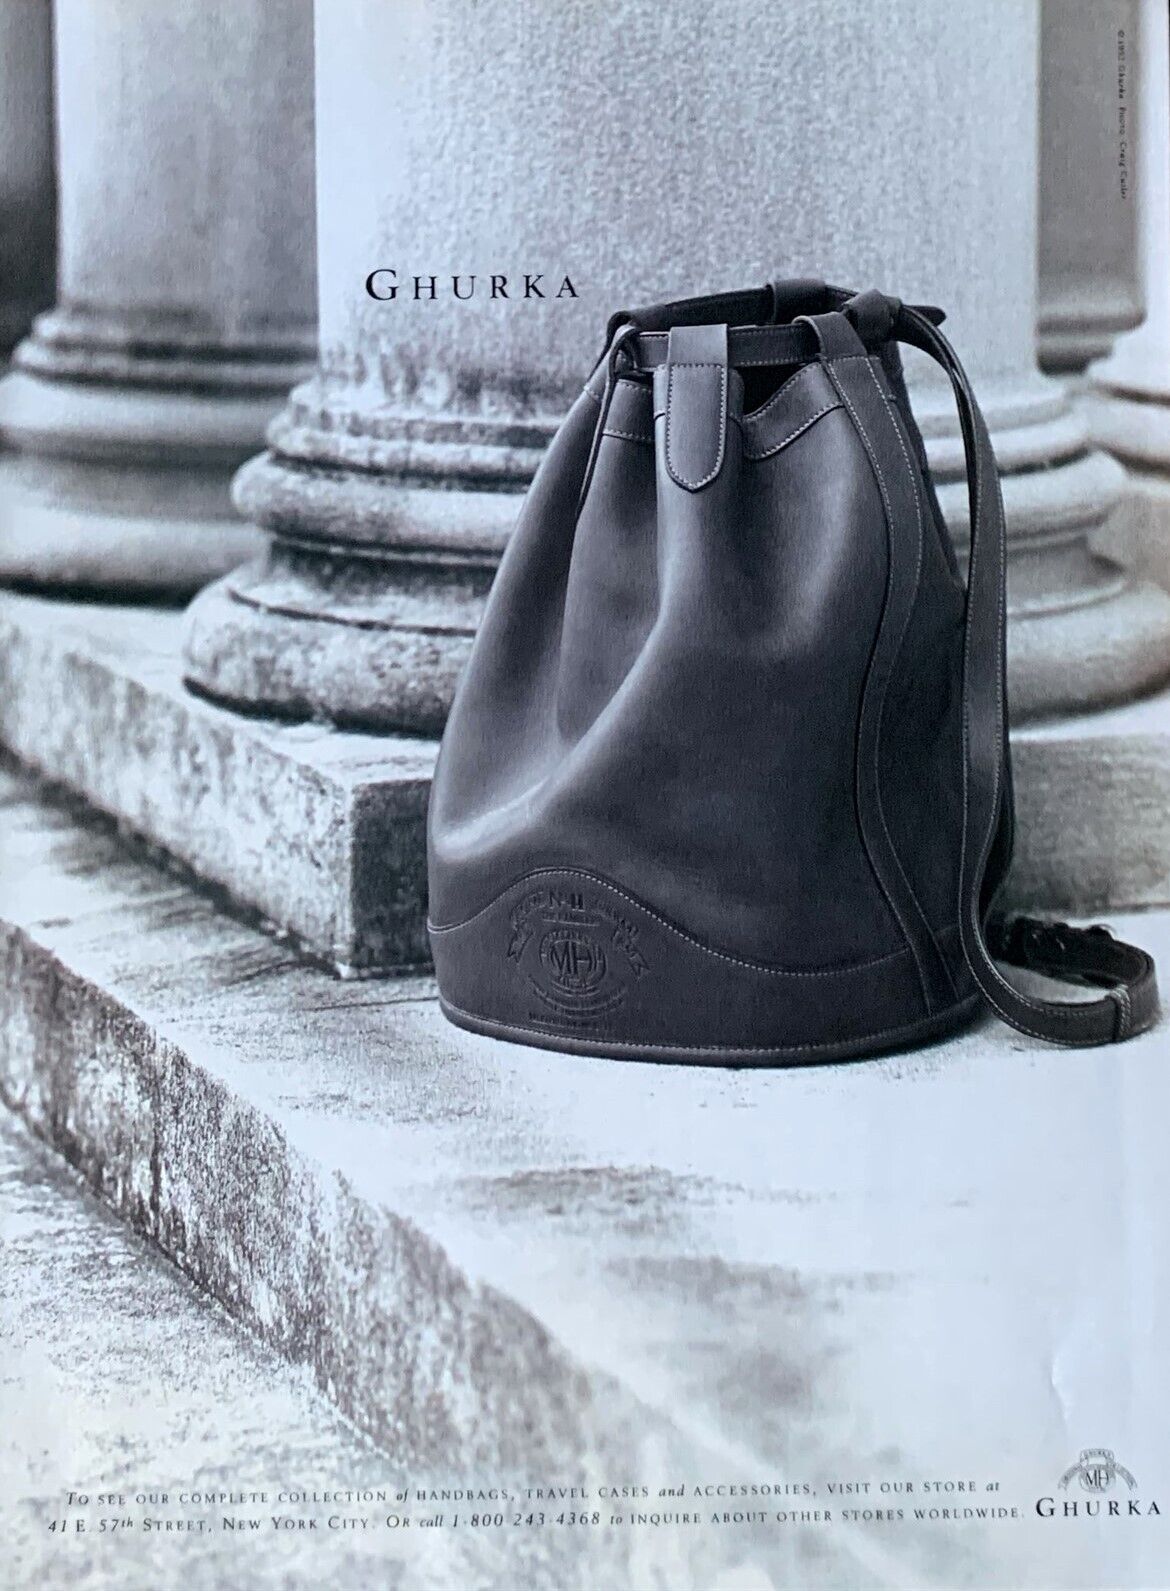 1992 Ghurka Handbags & Travel Cases Photography By Craig Cutler Print Ad